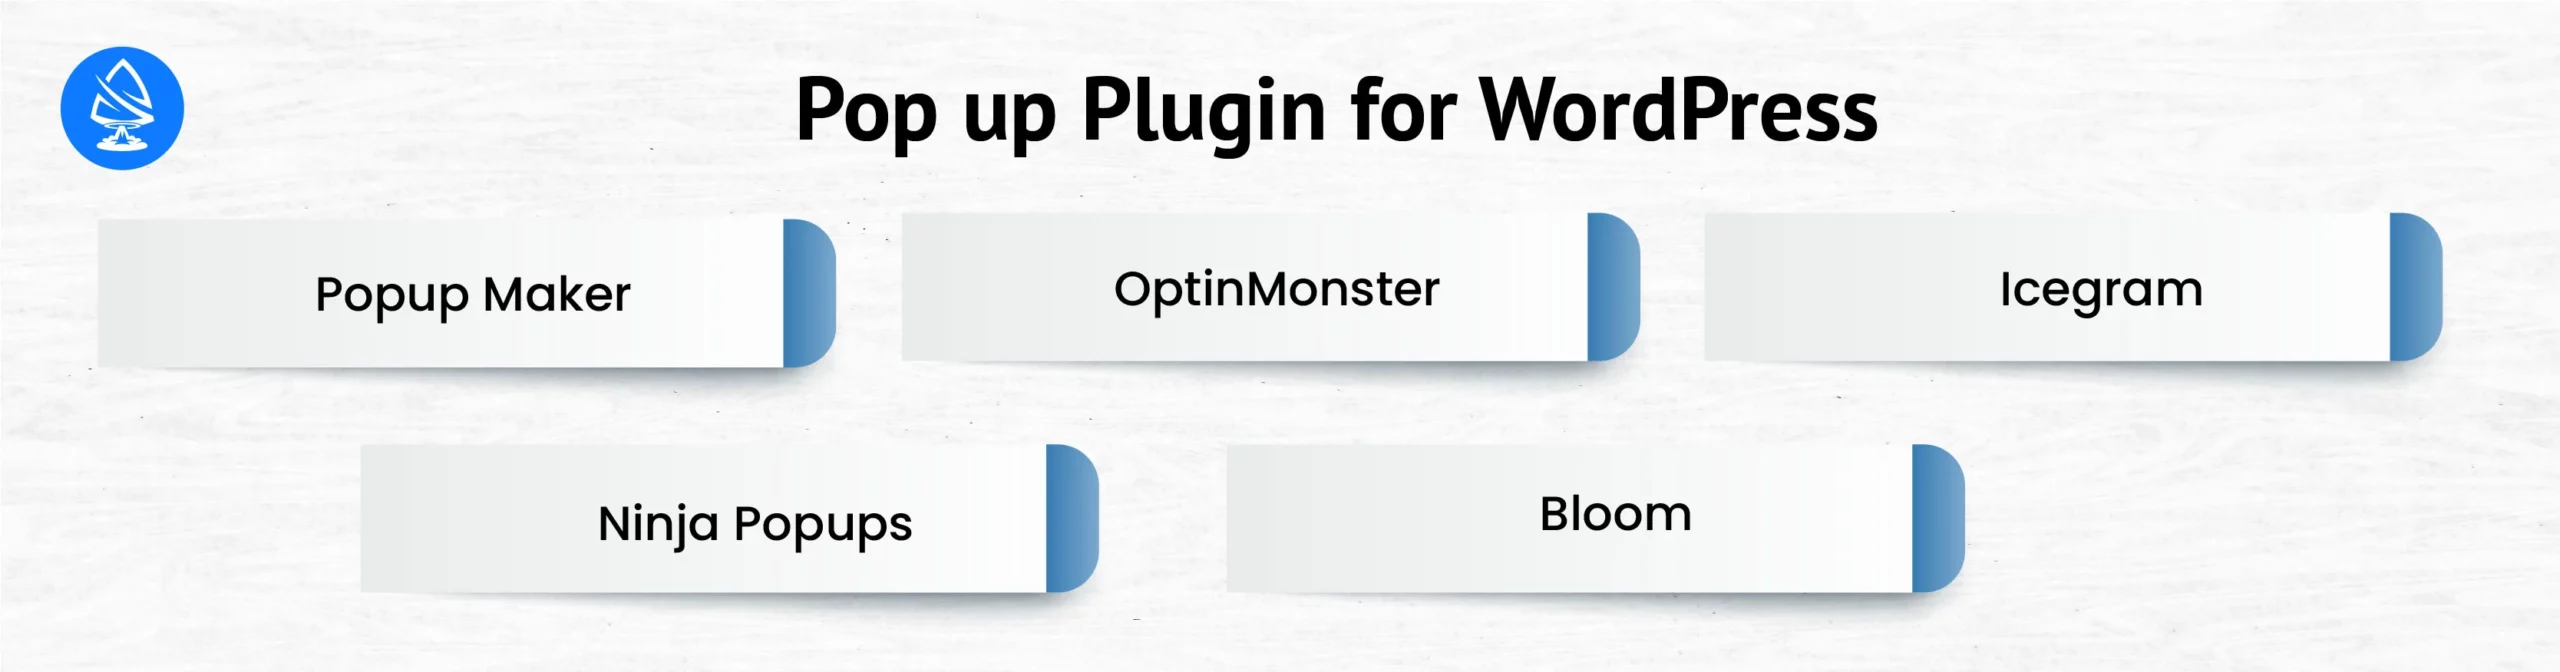 Pop up Plugin for WordPress